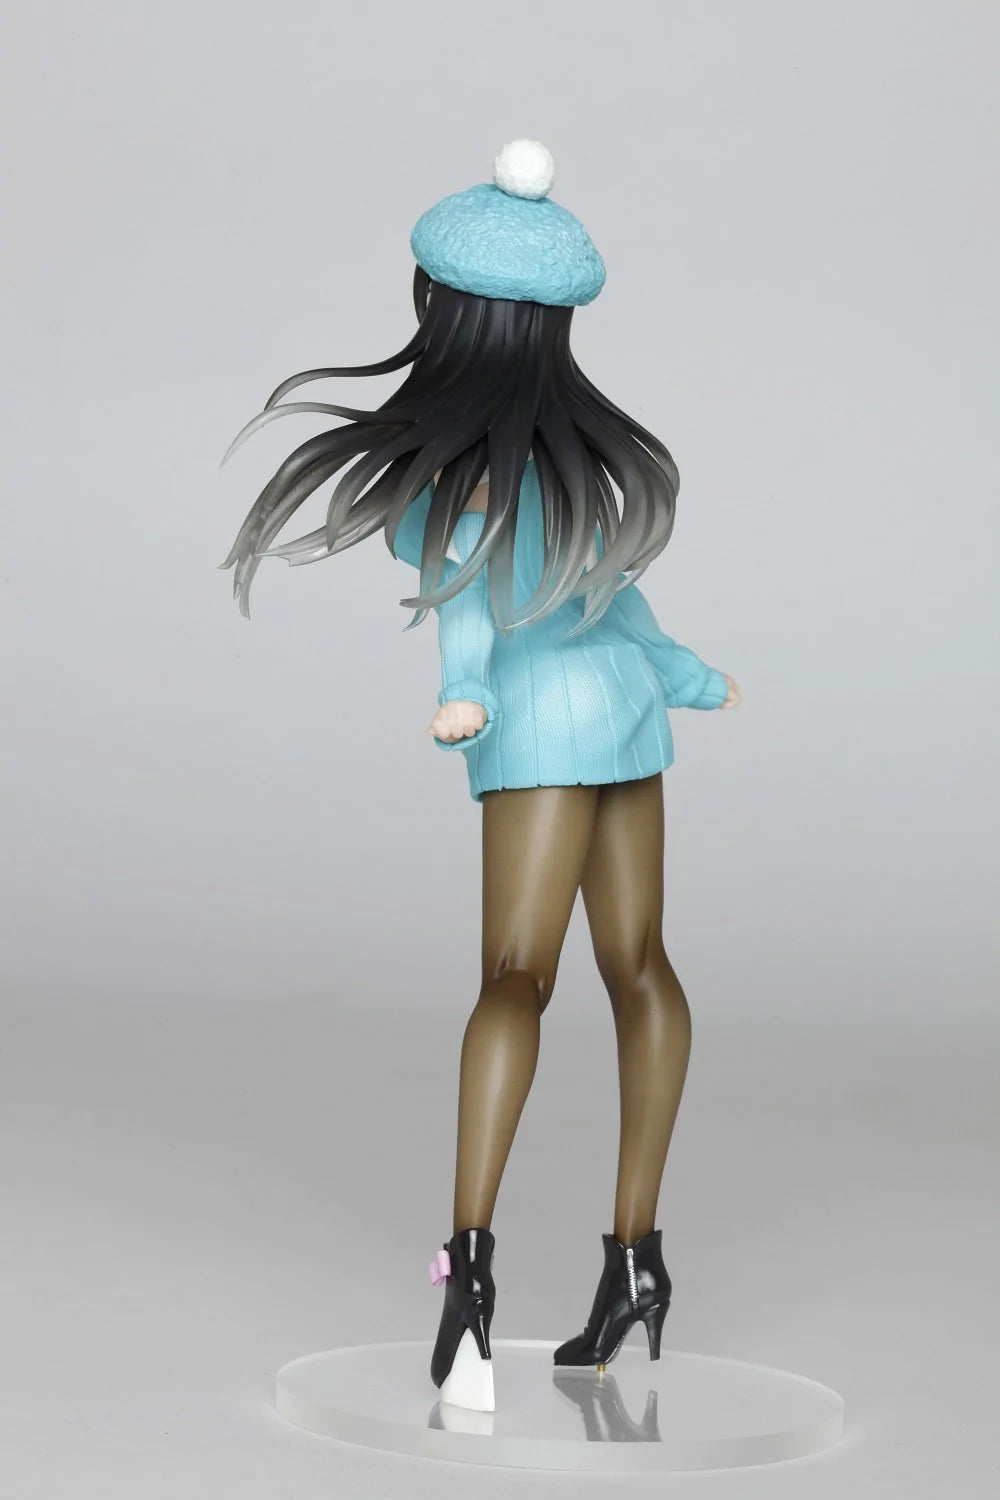 Rascal Does Not Dream Of Bunny Girl Senpai - Mai Sakurajima Coreful Figure (Newly Written Knit Dress Ver.)